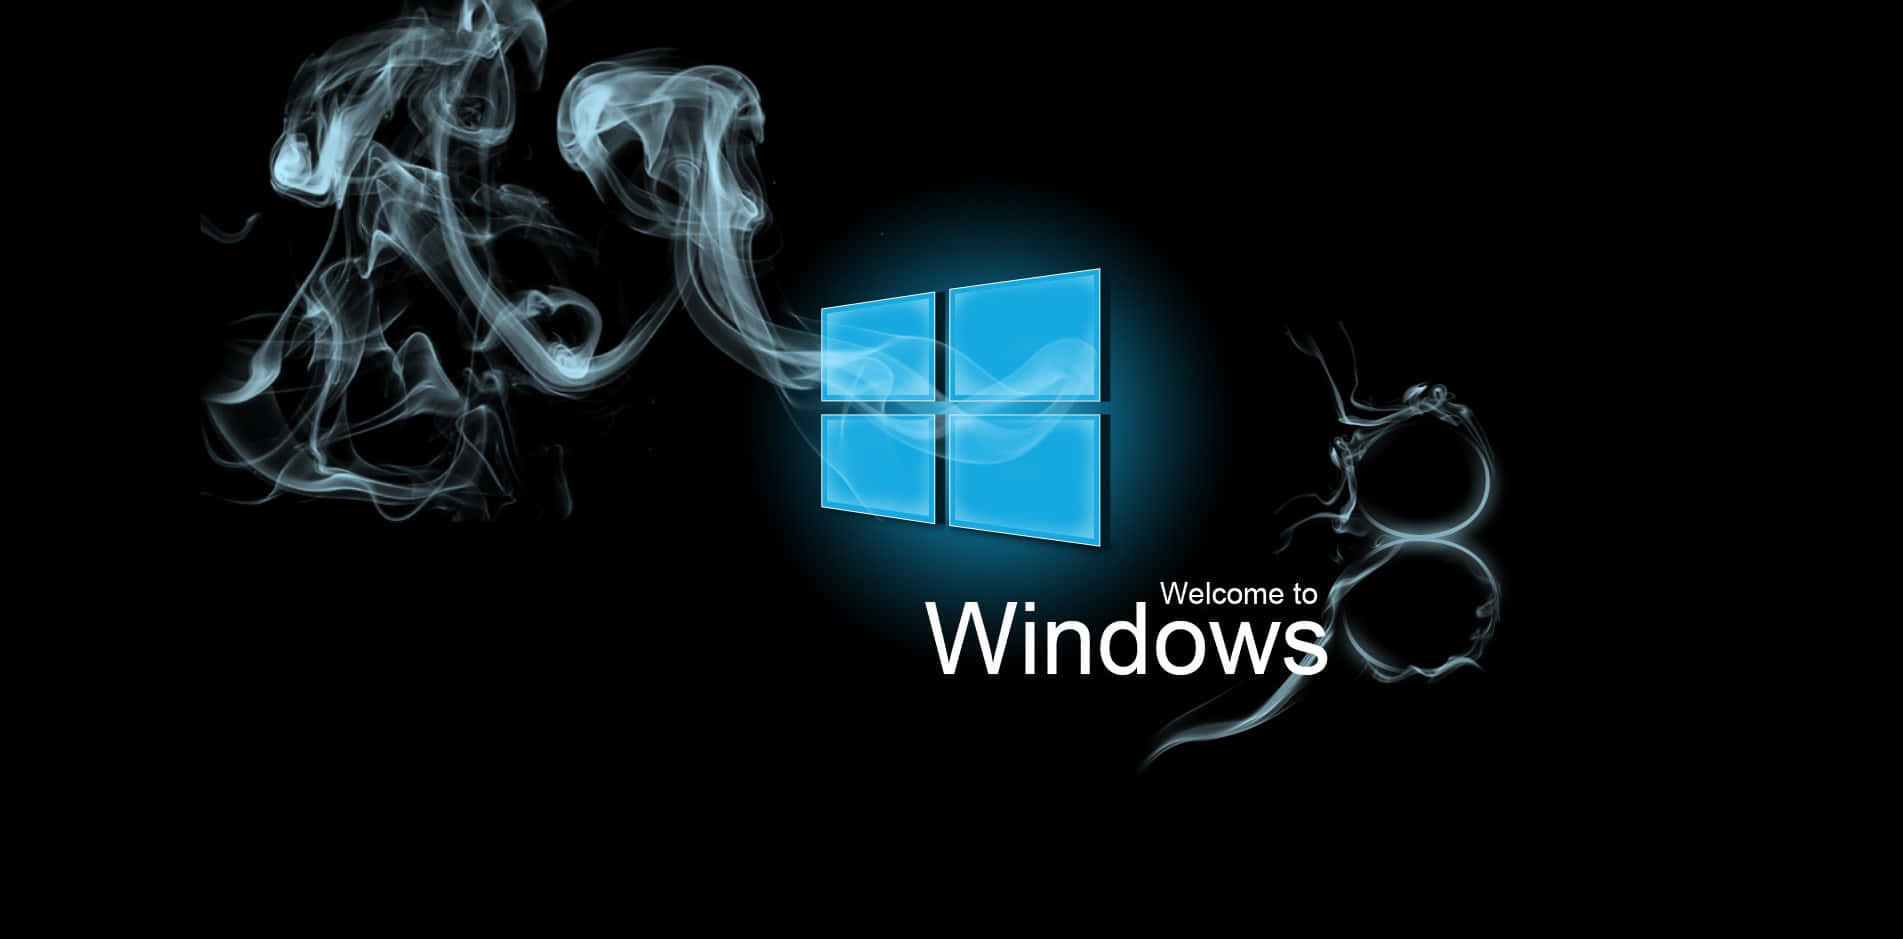 Windows 8 Vibrant Desktop Background